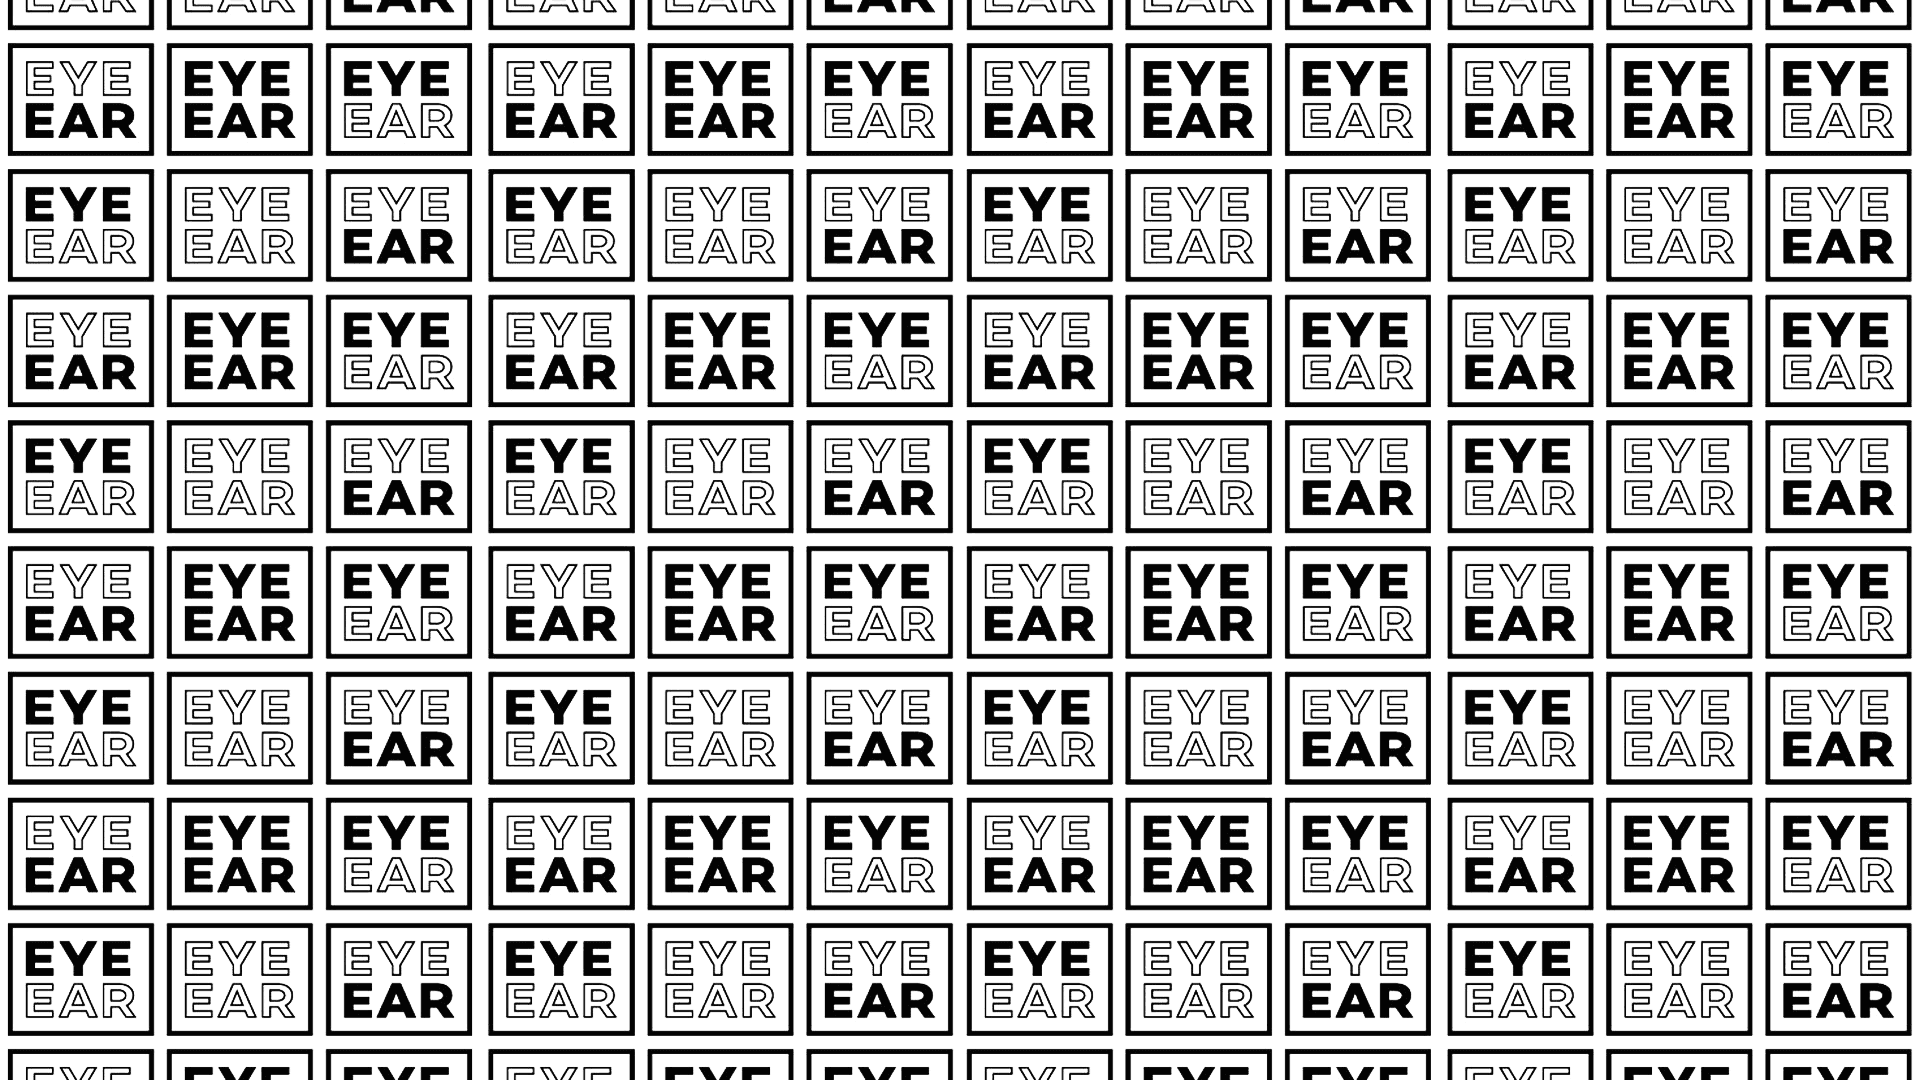 SSWeb-EyeEar-Pattern-Divider